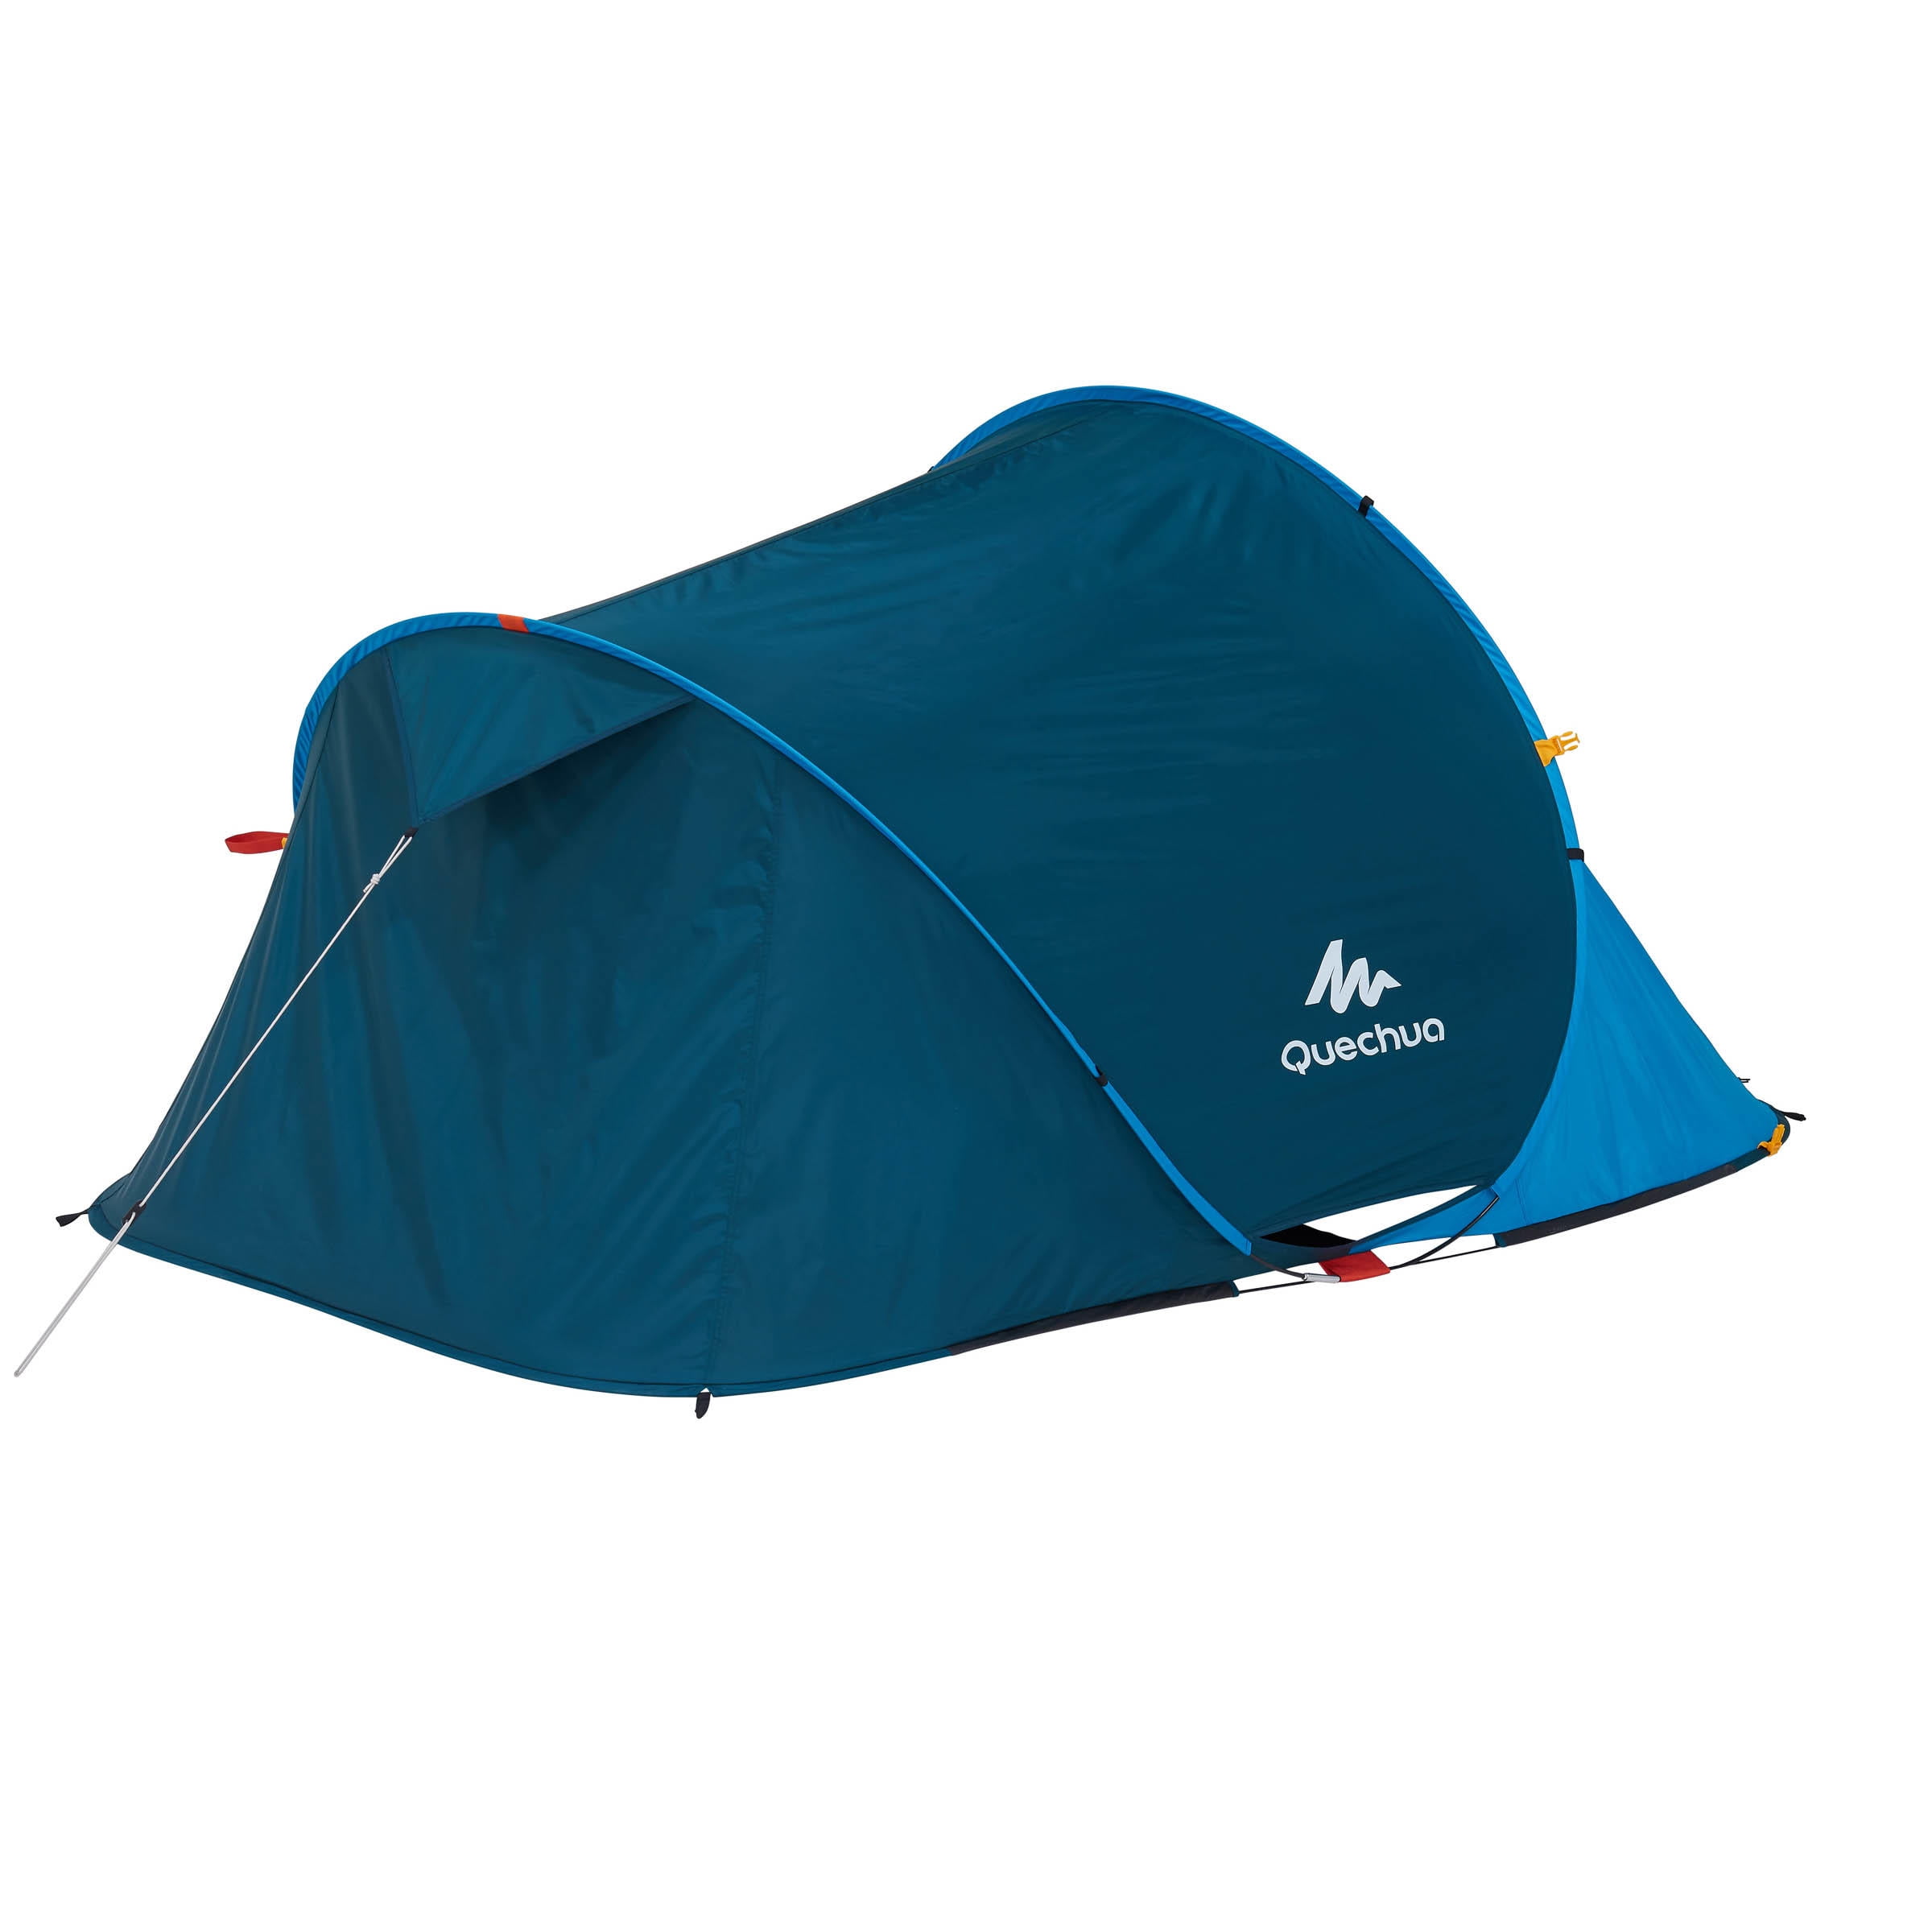 Decathlon Quechua, Instant 2 Second Pop Up, Portable Outdoor Camping Tent,  Waterproof, Windproof, 2 Person 